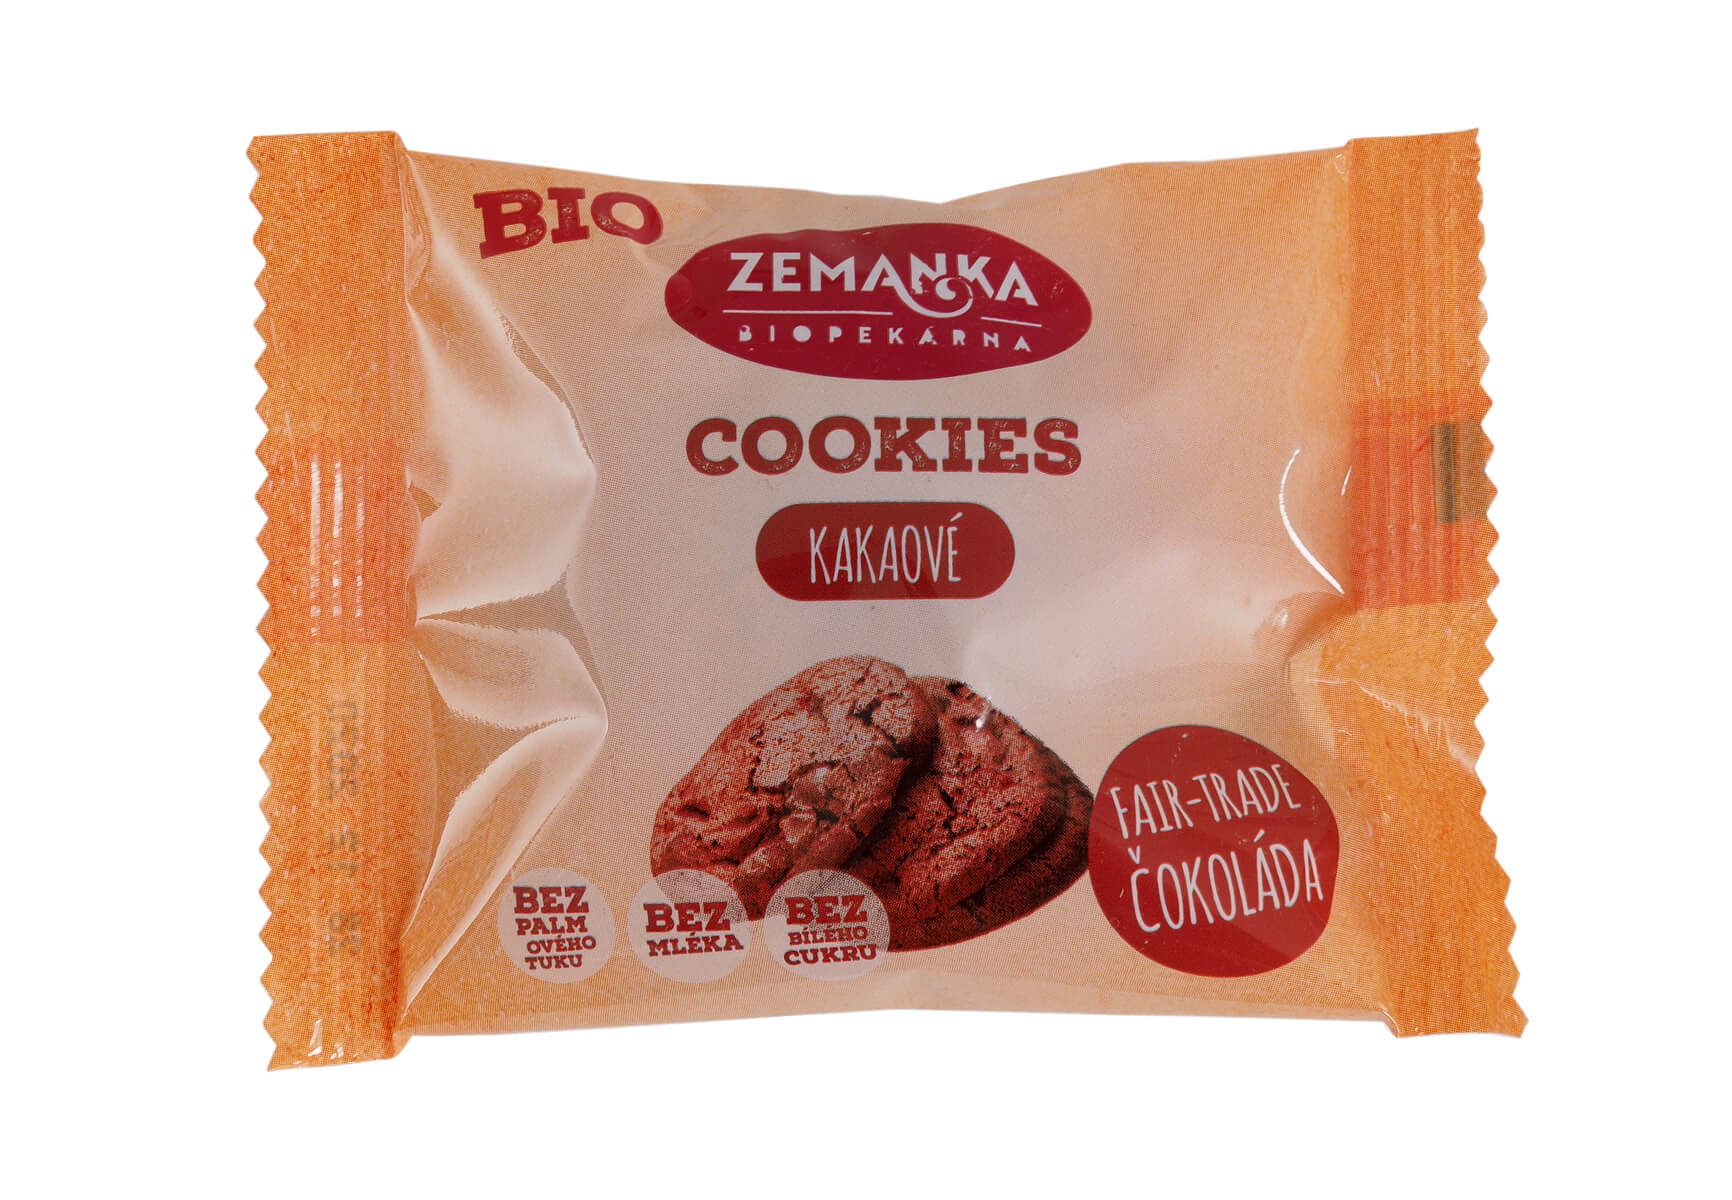 Biopekárna Zemanka BIO cookies kakaové 33 g - expirace